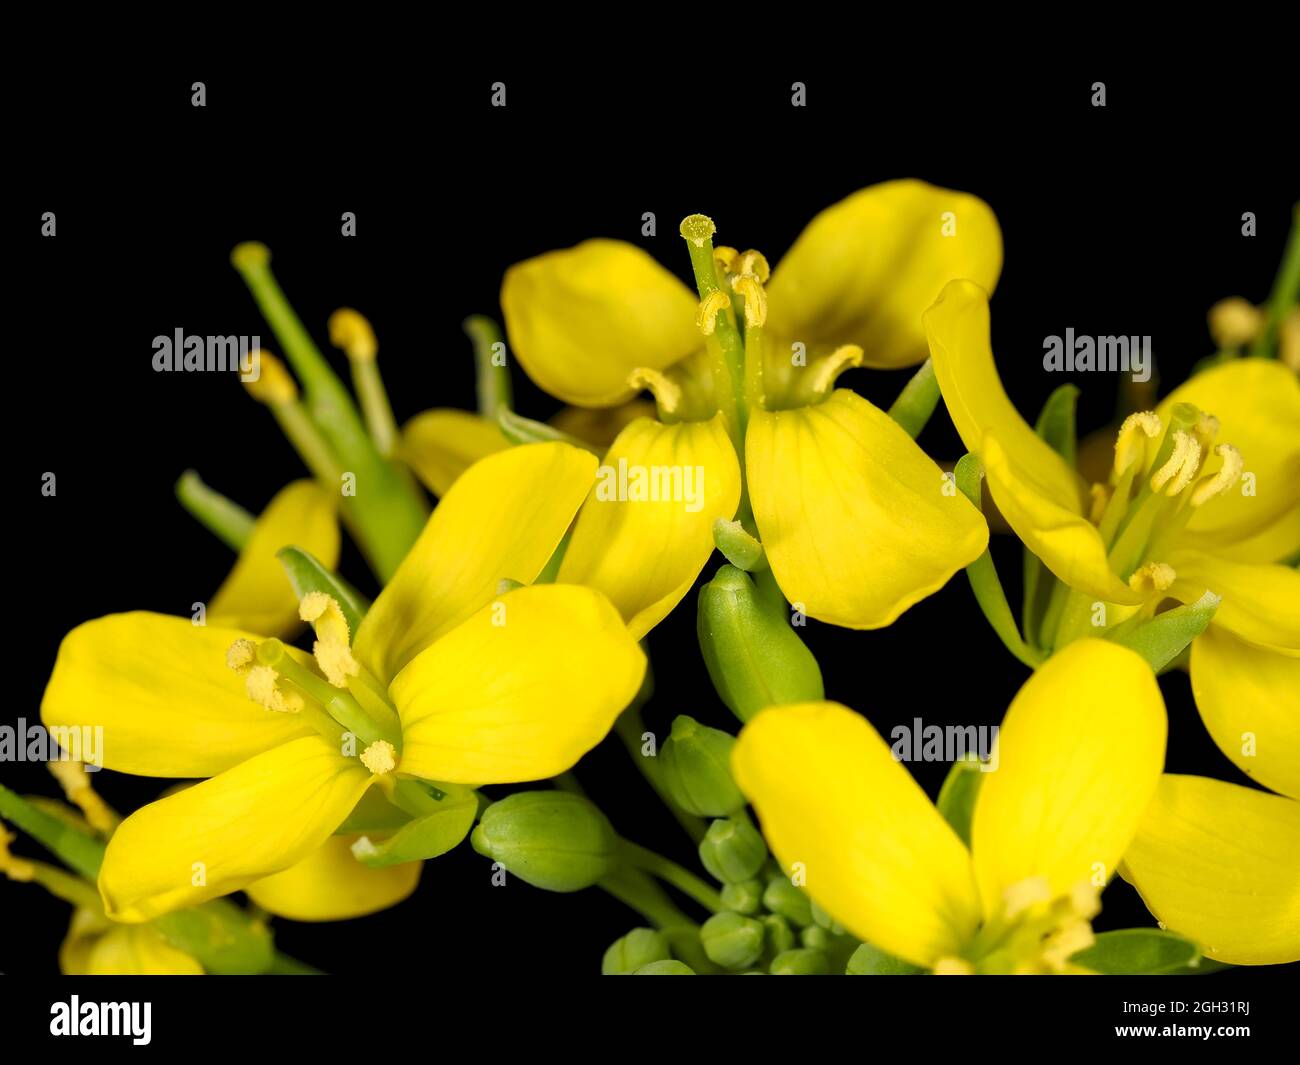 Komatsuna (Brassica rapa var. perviridis) flowers close-up Stock Photo